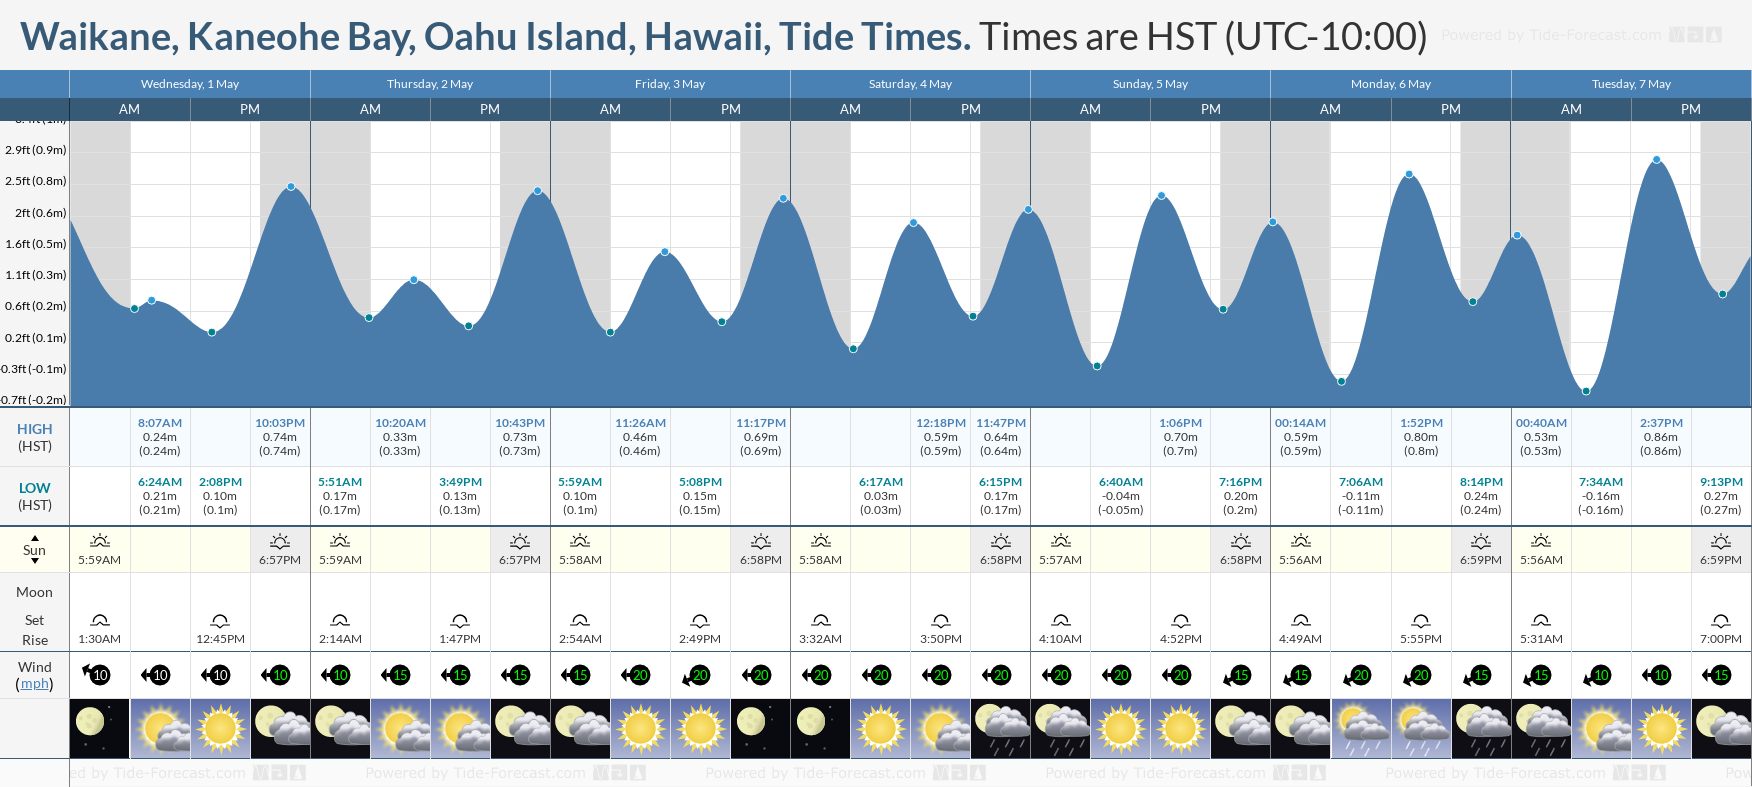 Waikane, Kaneohe Bay, Oahu Island, Hawaii Tide Chart including high and low tide tide times for the next 7 days